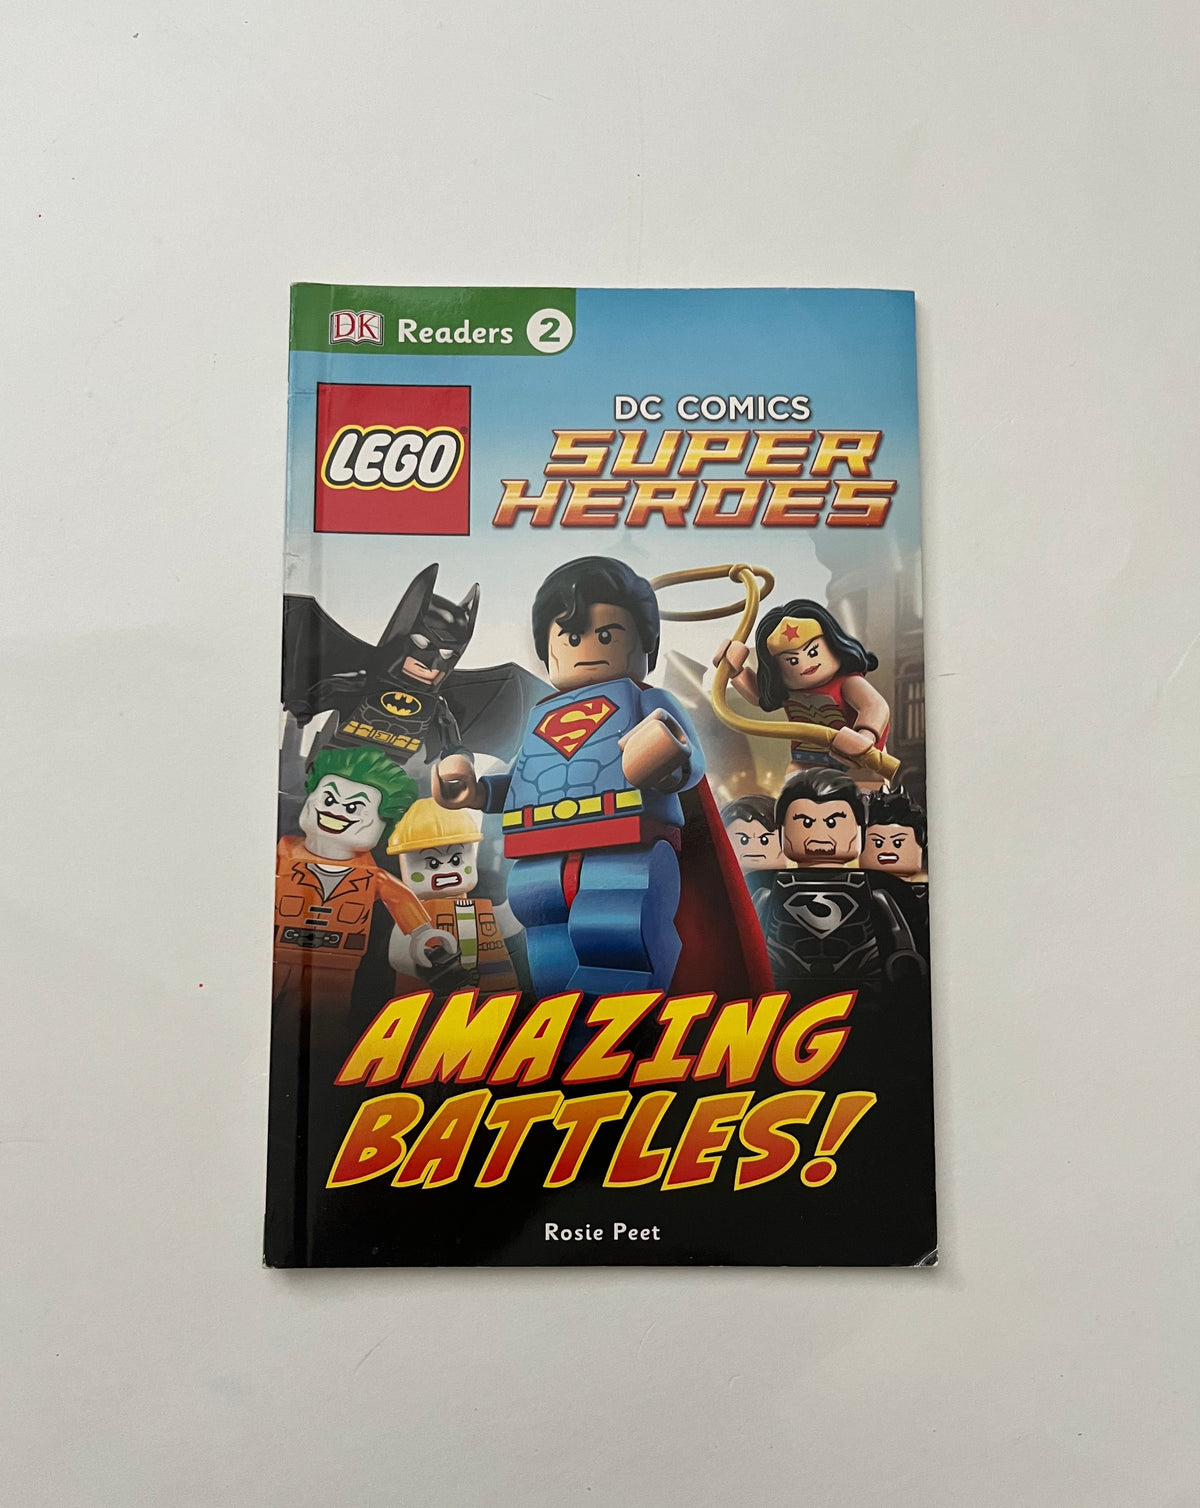 Lego DC Comics Super Heroes: Amazing Battles! by Rosie Peet